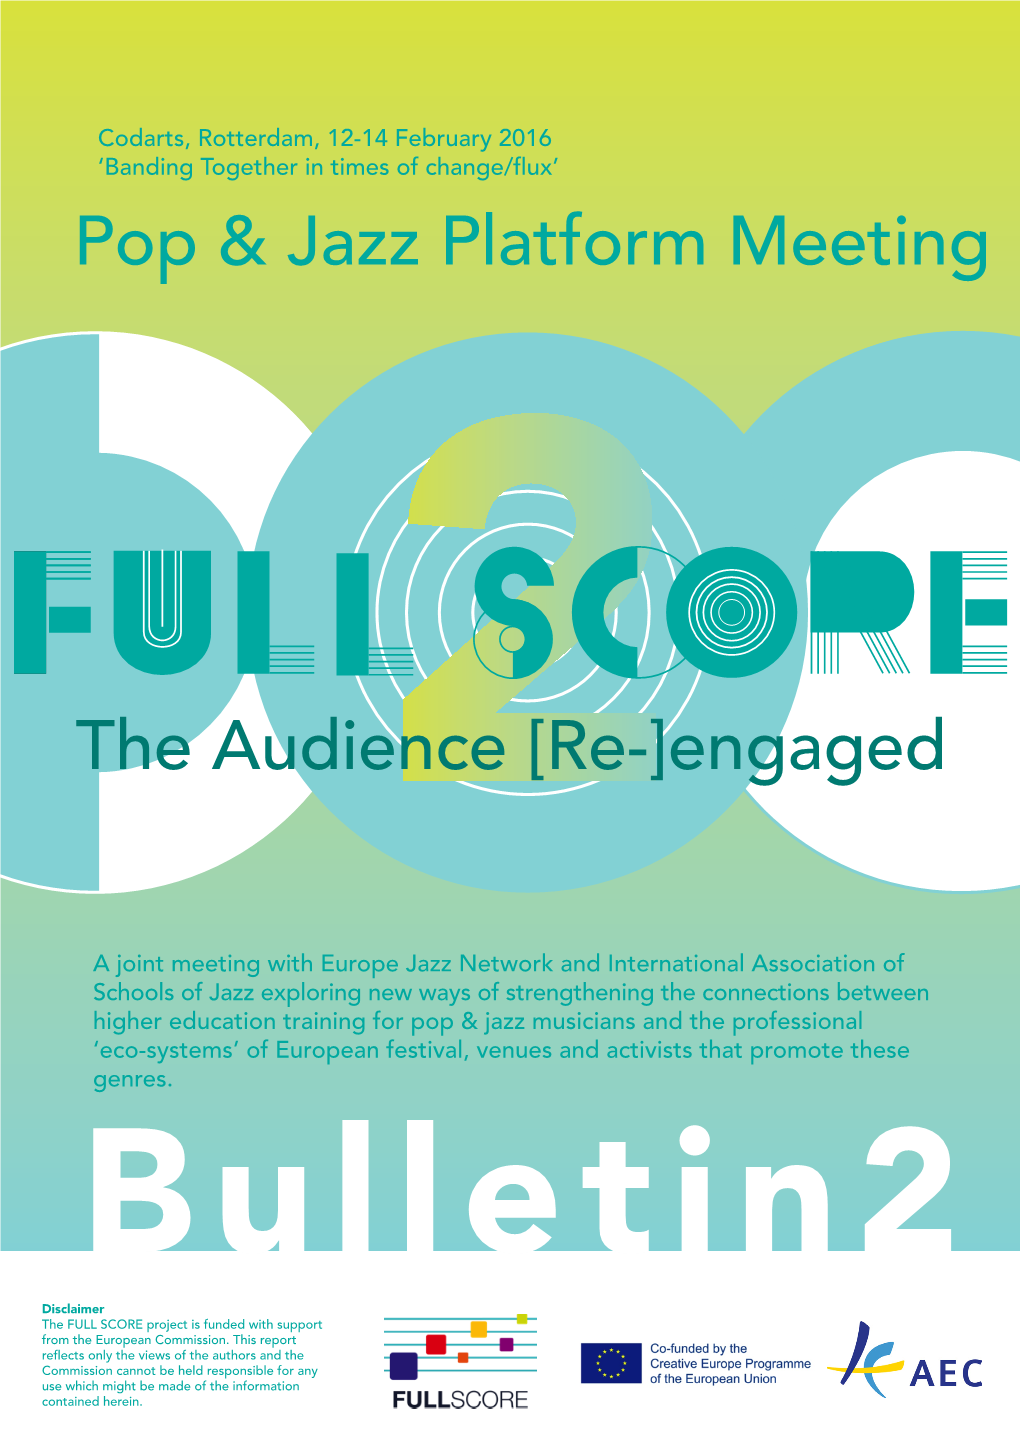 Pop & Jazz Platform Meeting 2The Audience [Re-]Engaged